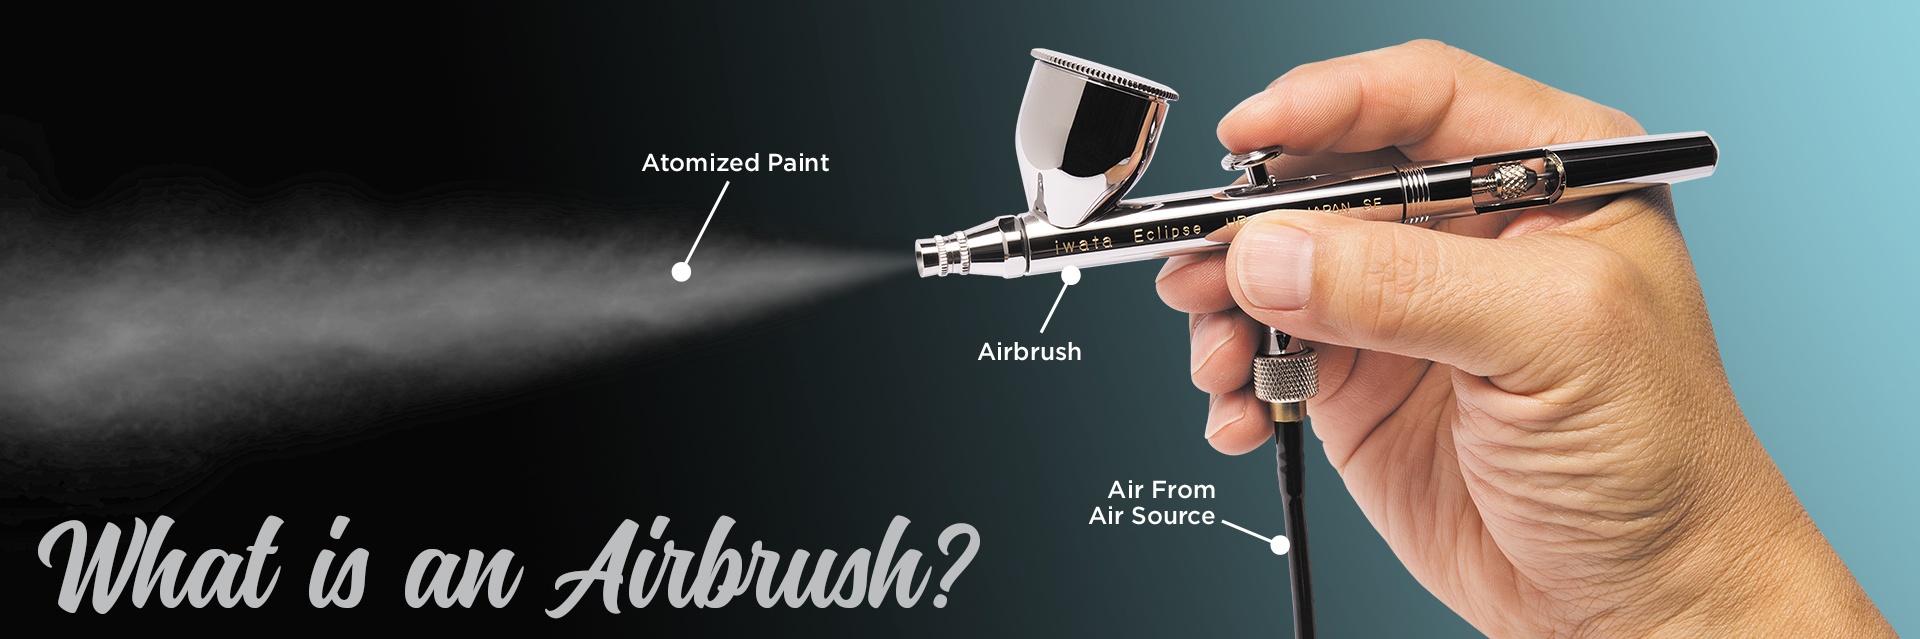 Professional Internal-Mix Airbrush Kit - Choice Tool Supply